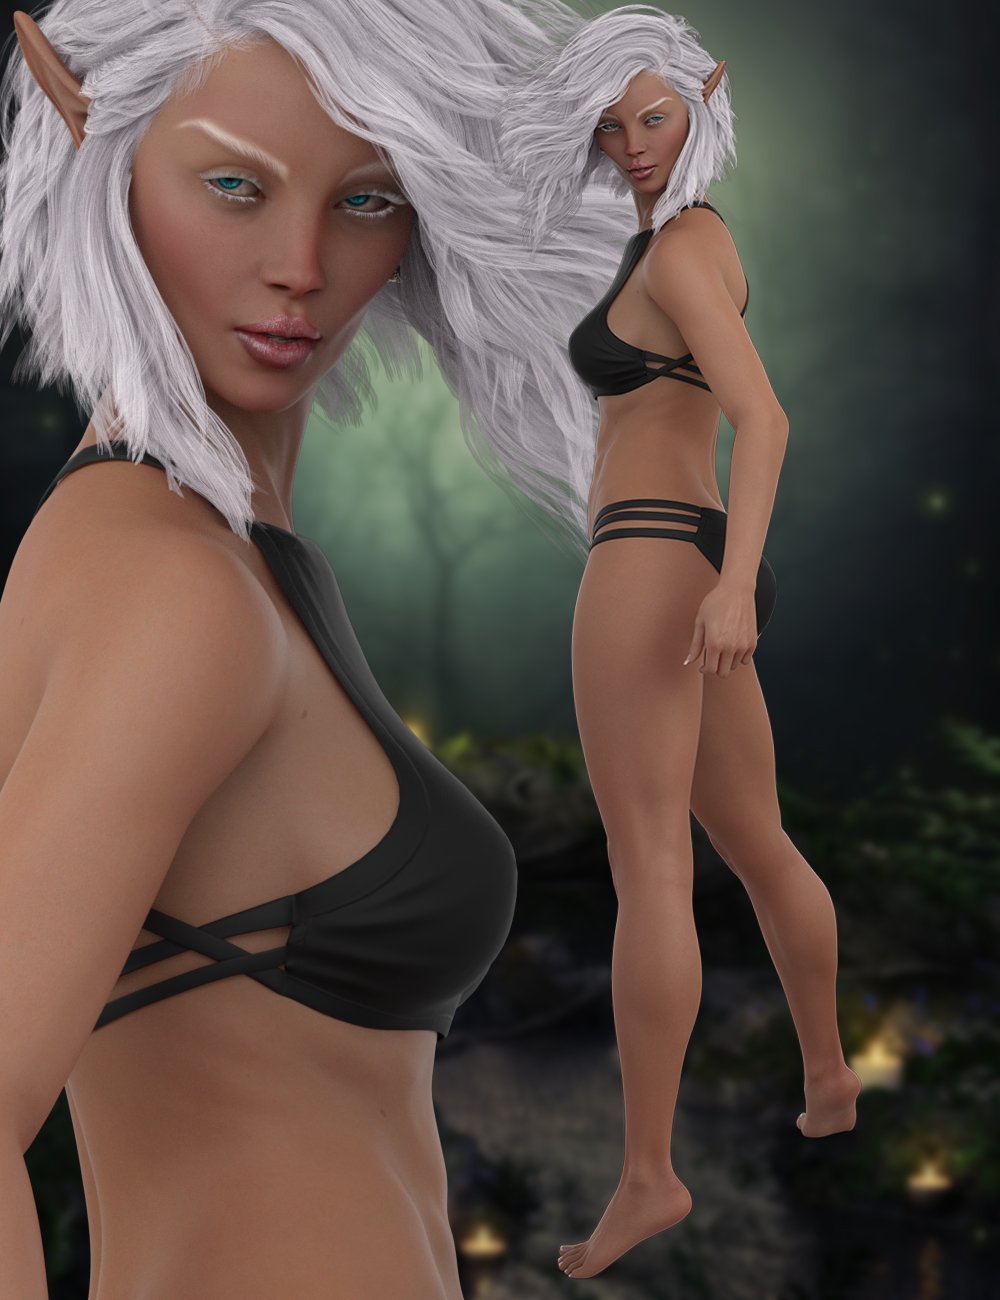 Aella for Genesis 8 Female by: hotlilme74, 3D Models by Daz 3D